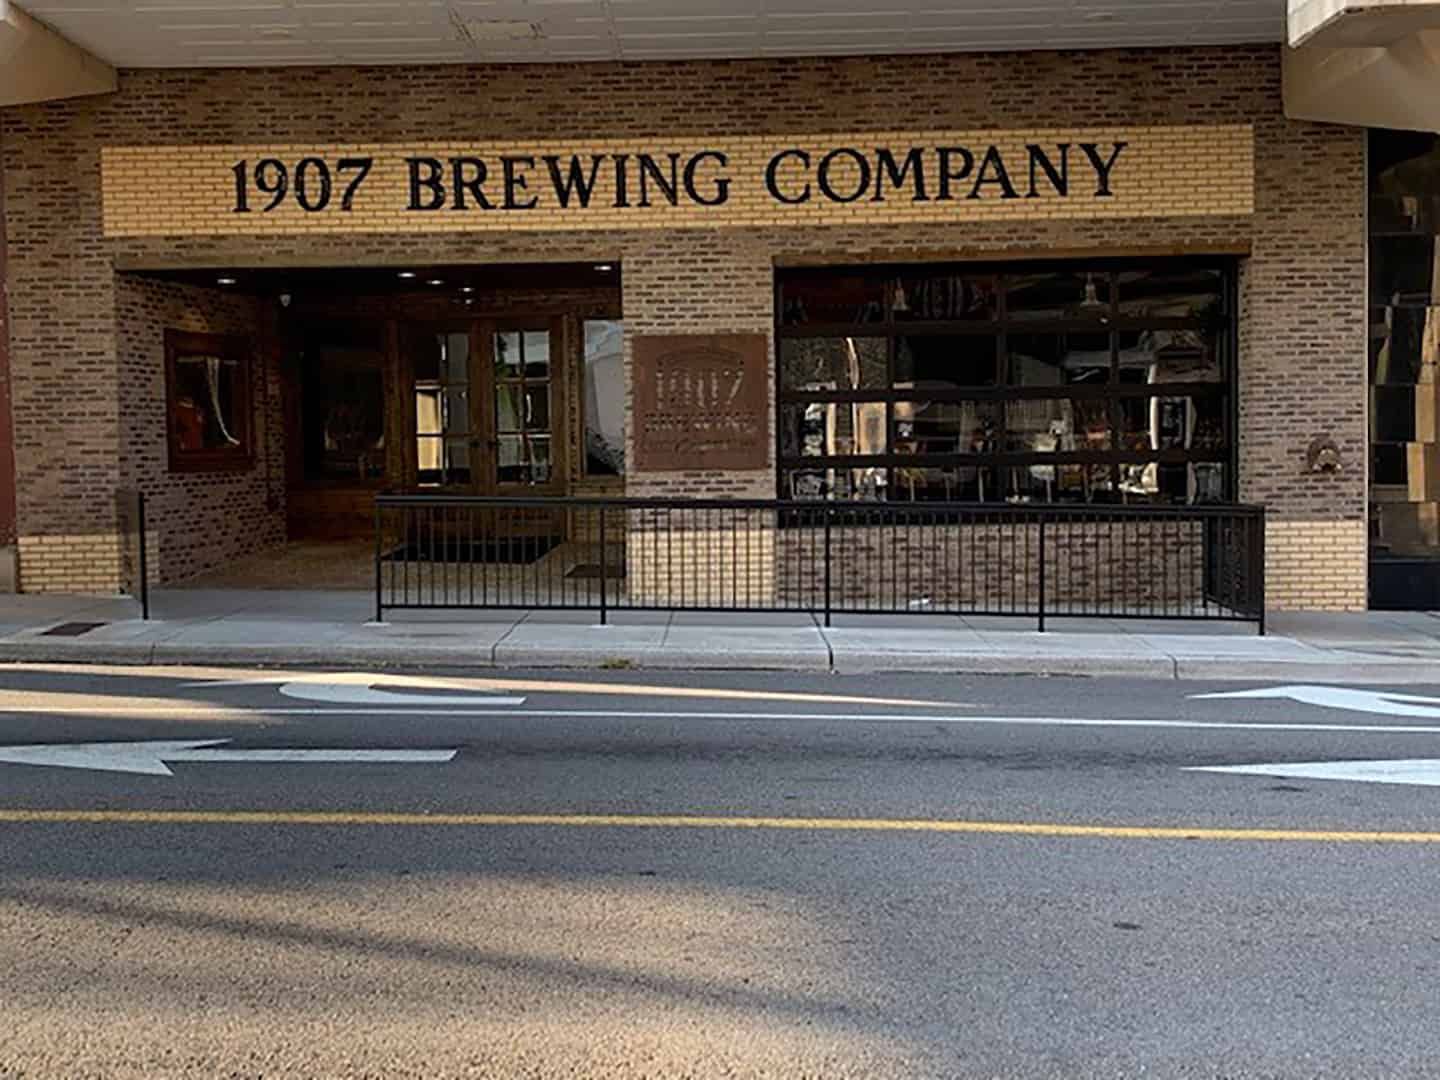 1907 Brewing Company exterior